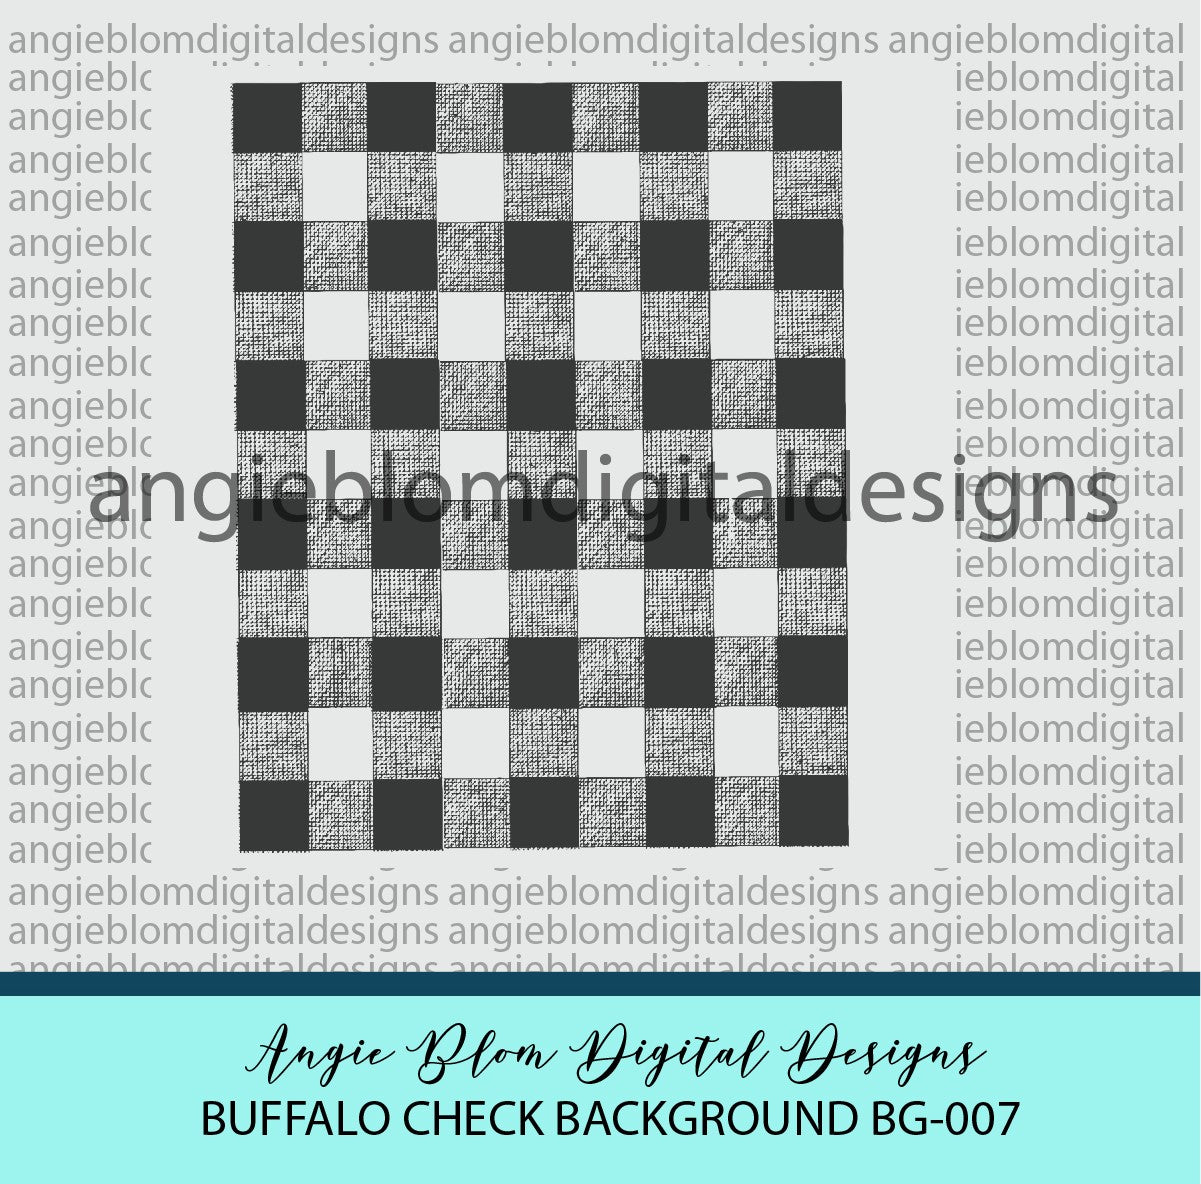 Buffalo Check Background – Angie Blom Digital Designs